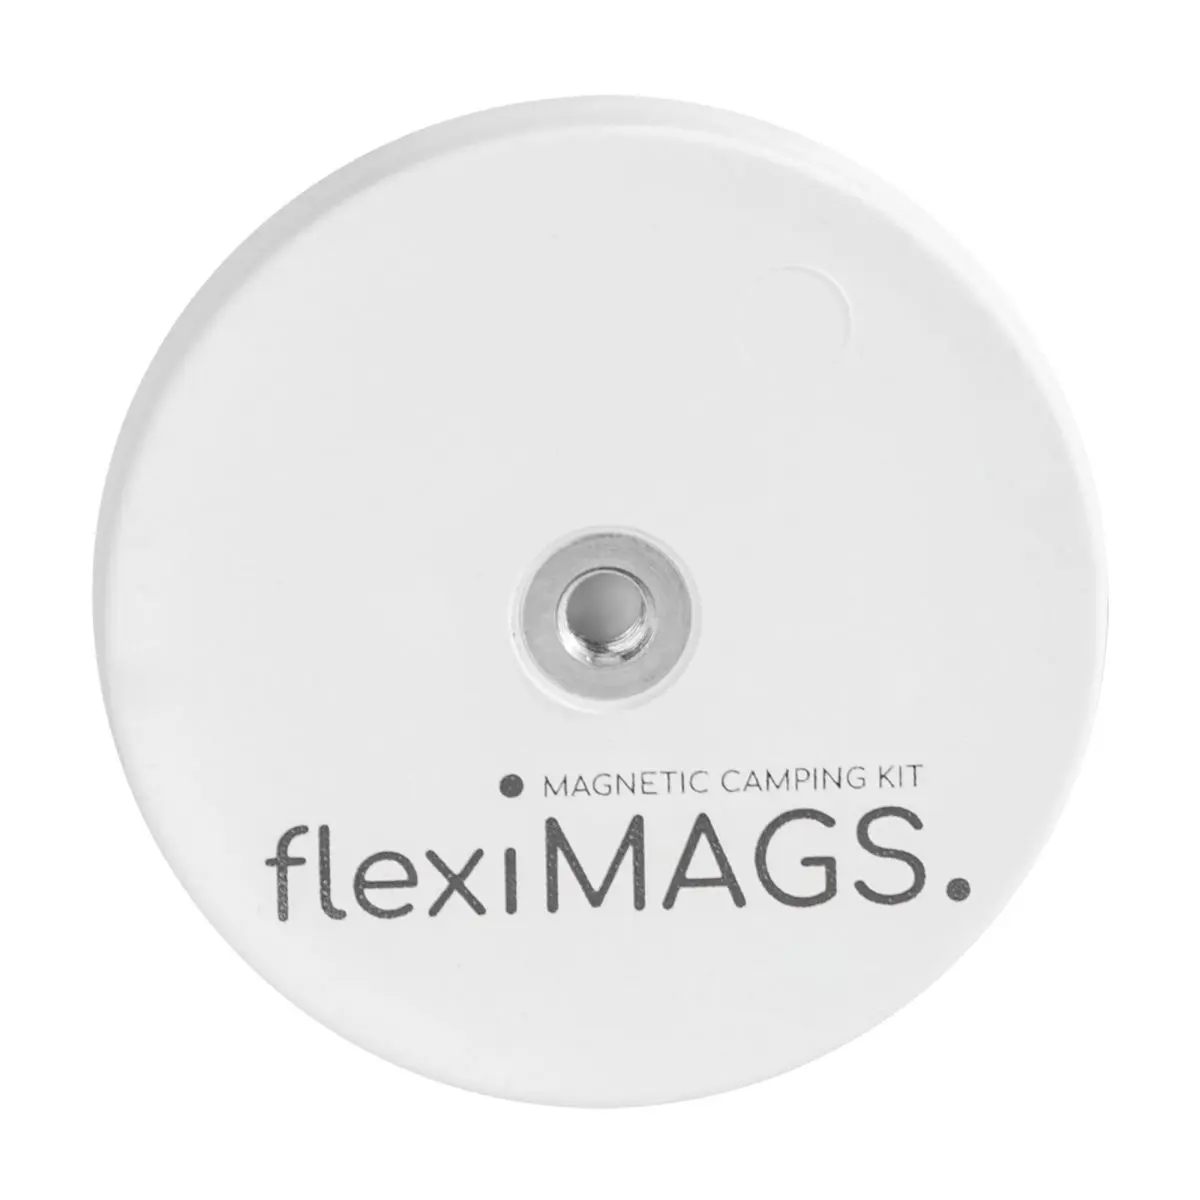 Magnet rund flexiMAGS - flexiMAG-43, 4er Set wei